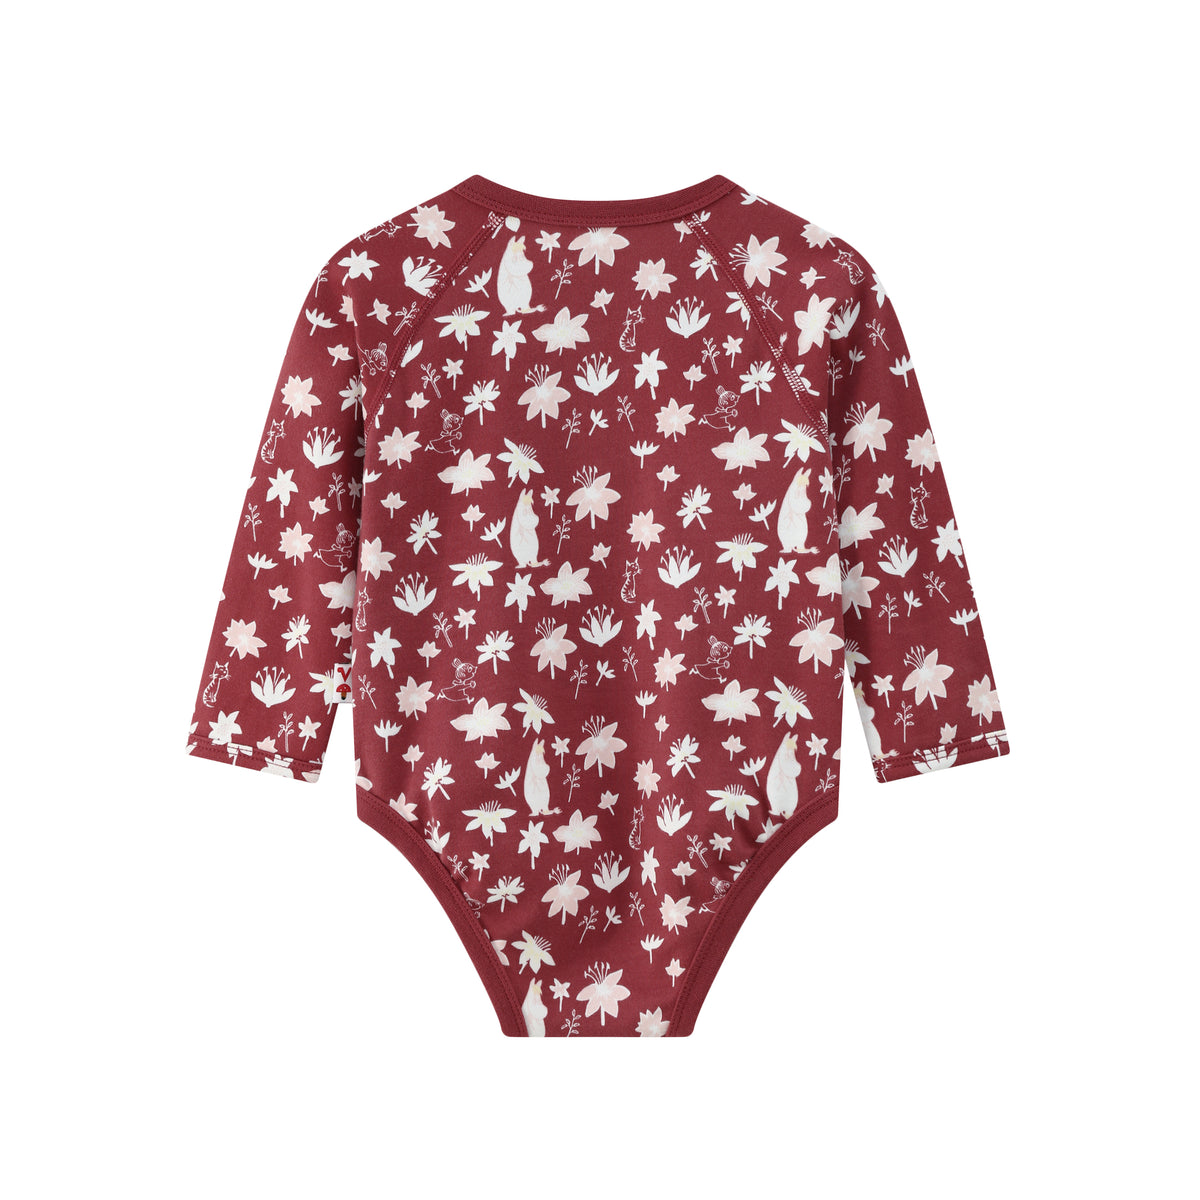 Vauva x Moomin Vauva x Moomin FW23 - Baby Girls Moomin All Over Print Cotton Long Sleeve Bodysuit (Red) Bodysuit